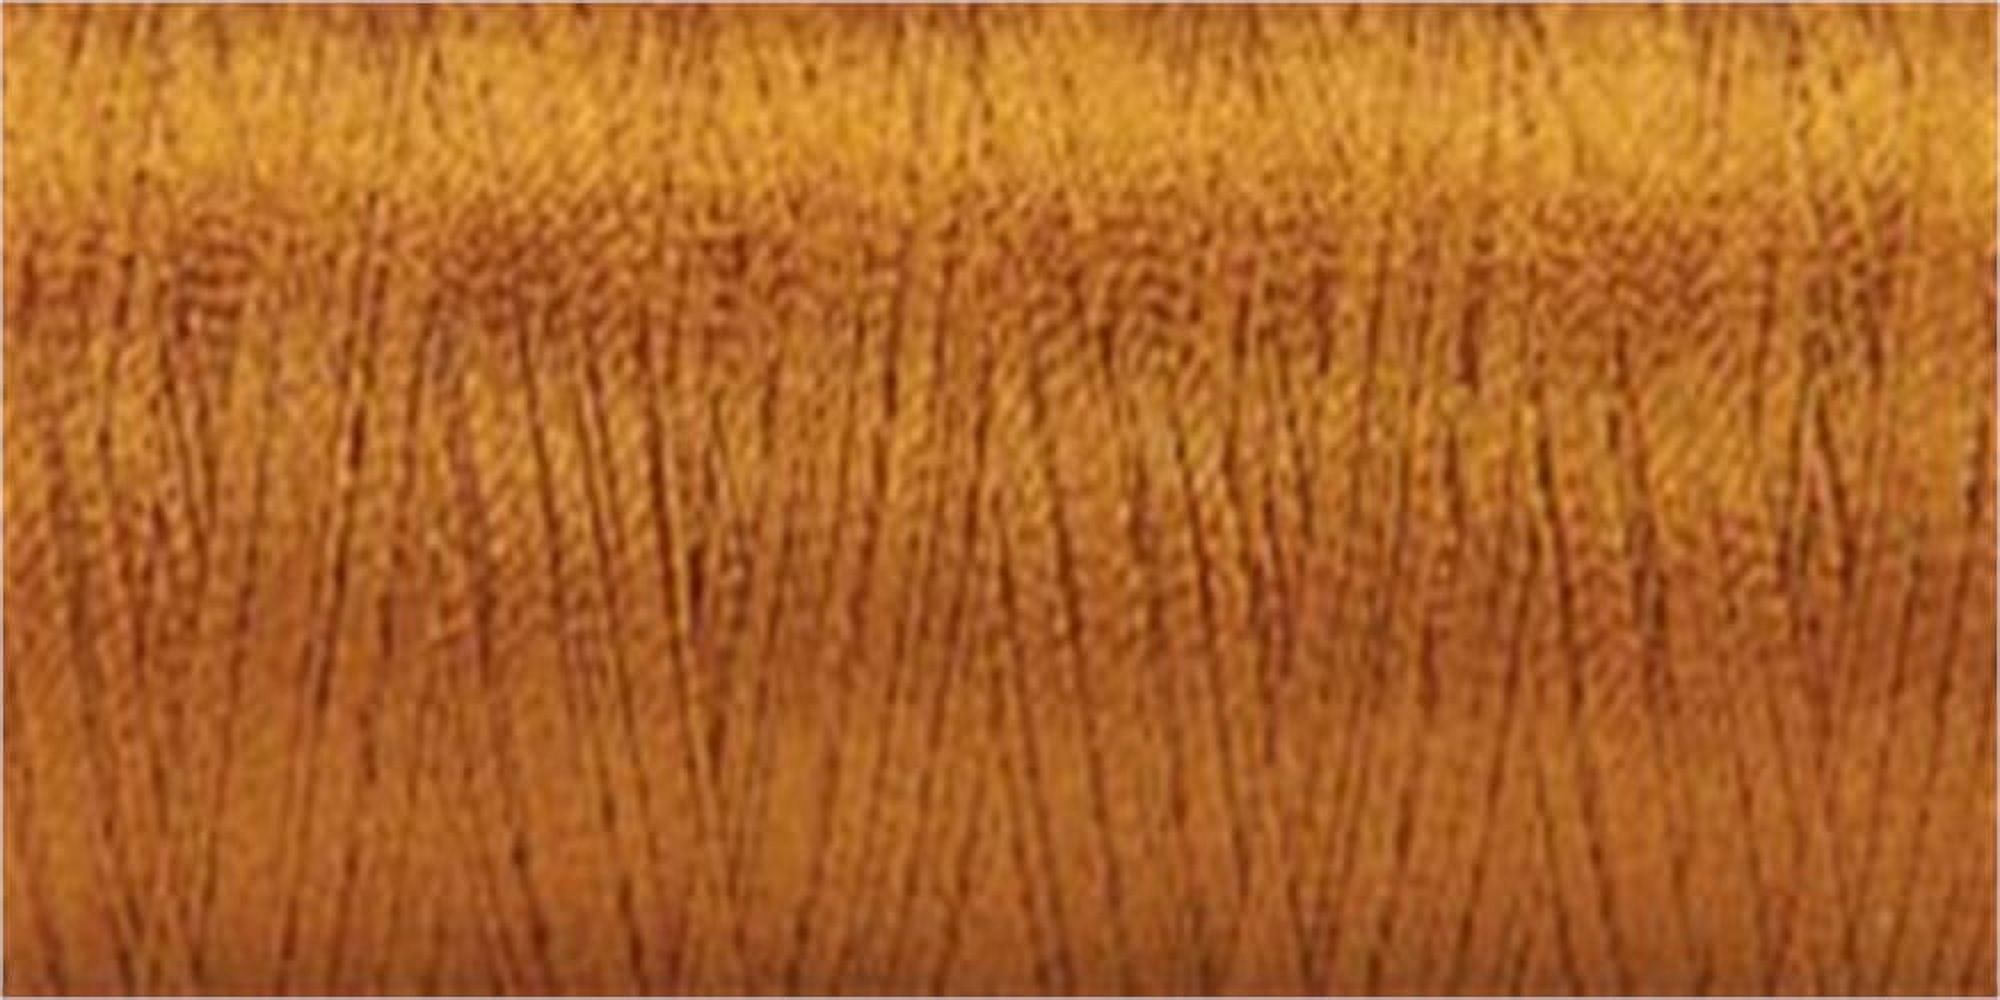 Melrose Thread 600yd-Almond, Pk 5, Melrose - image 1 of 1